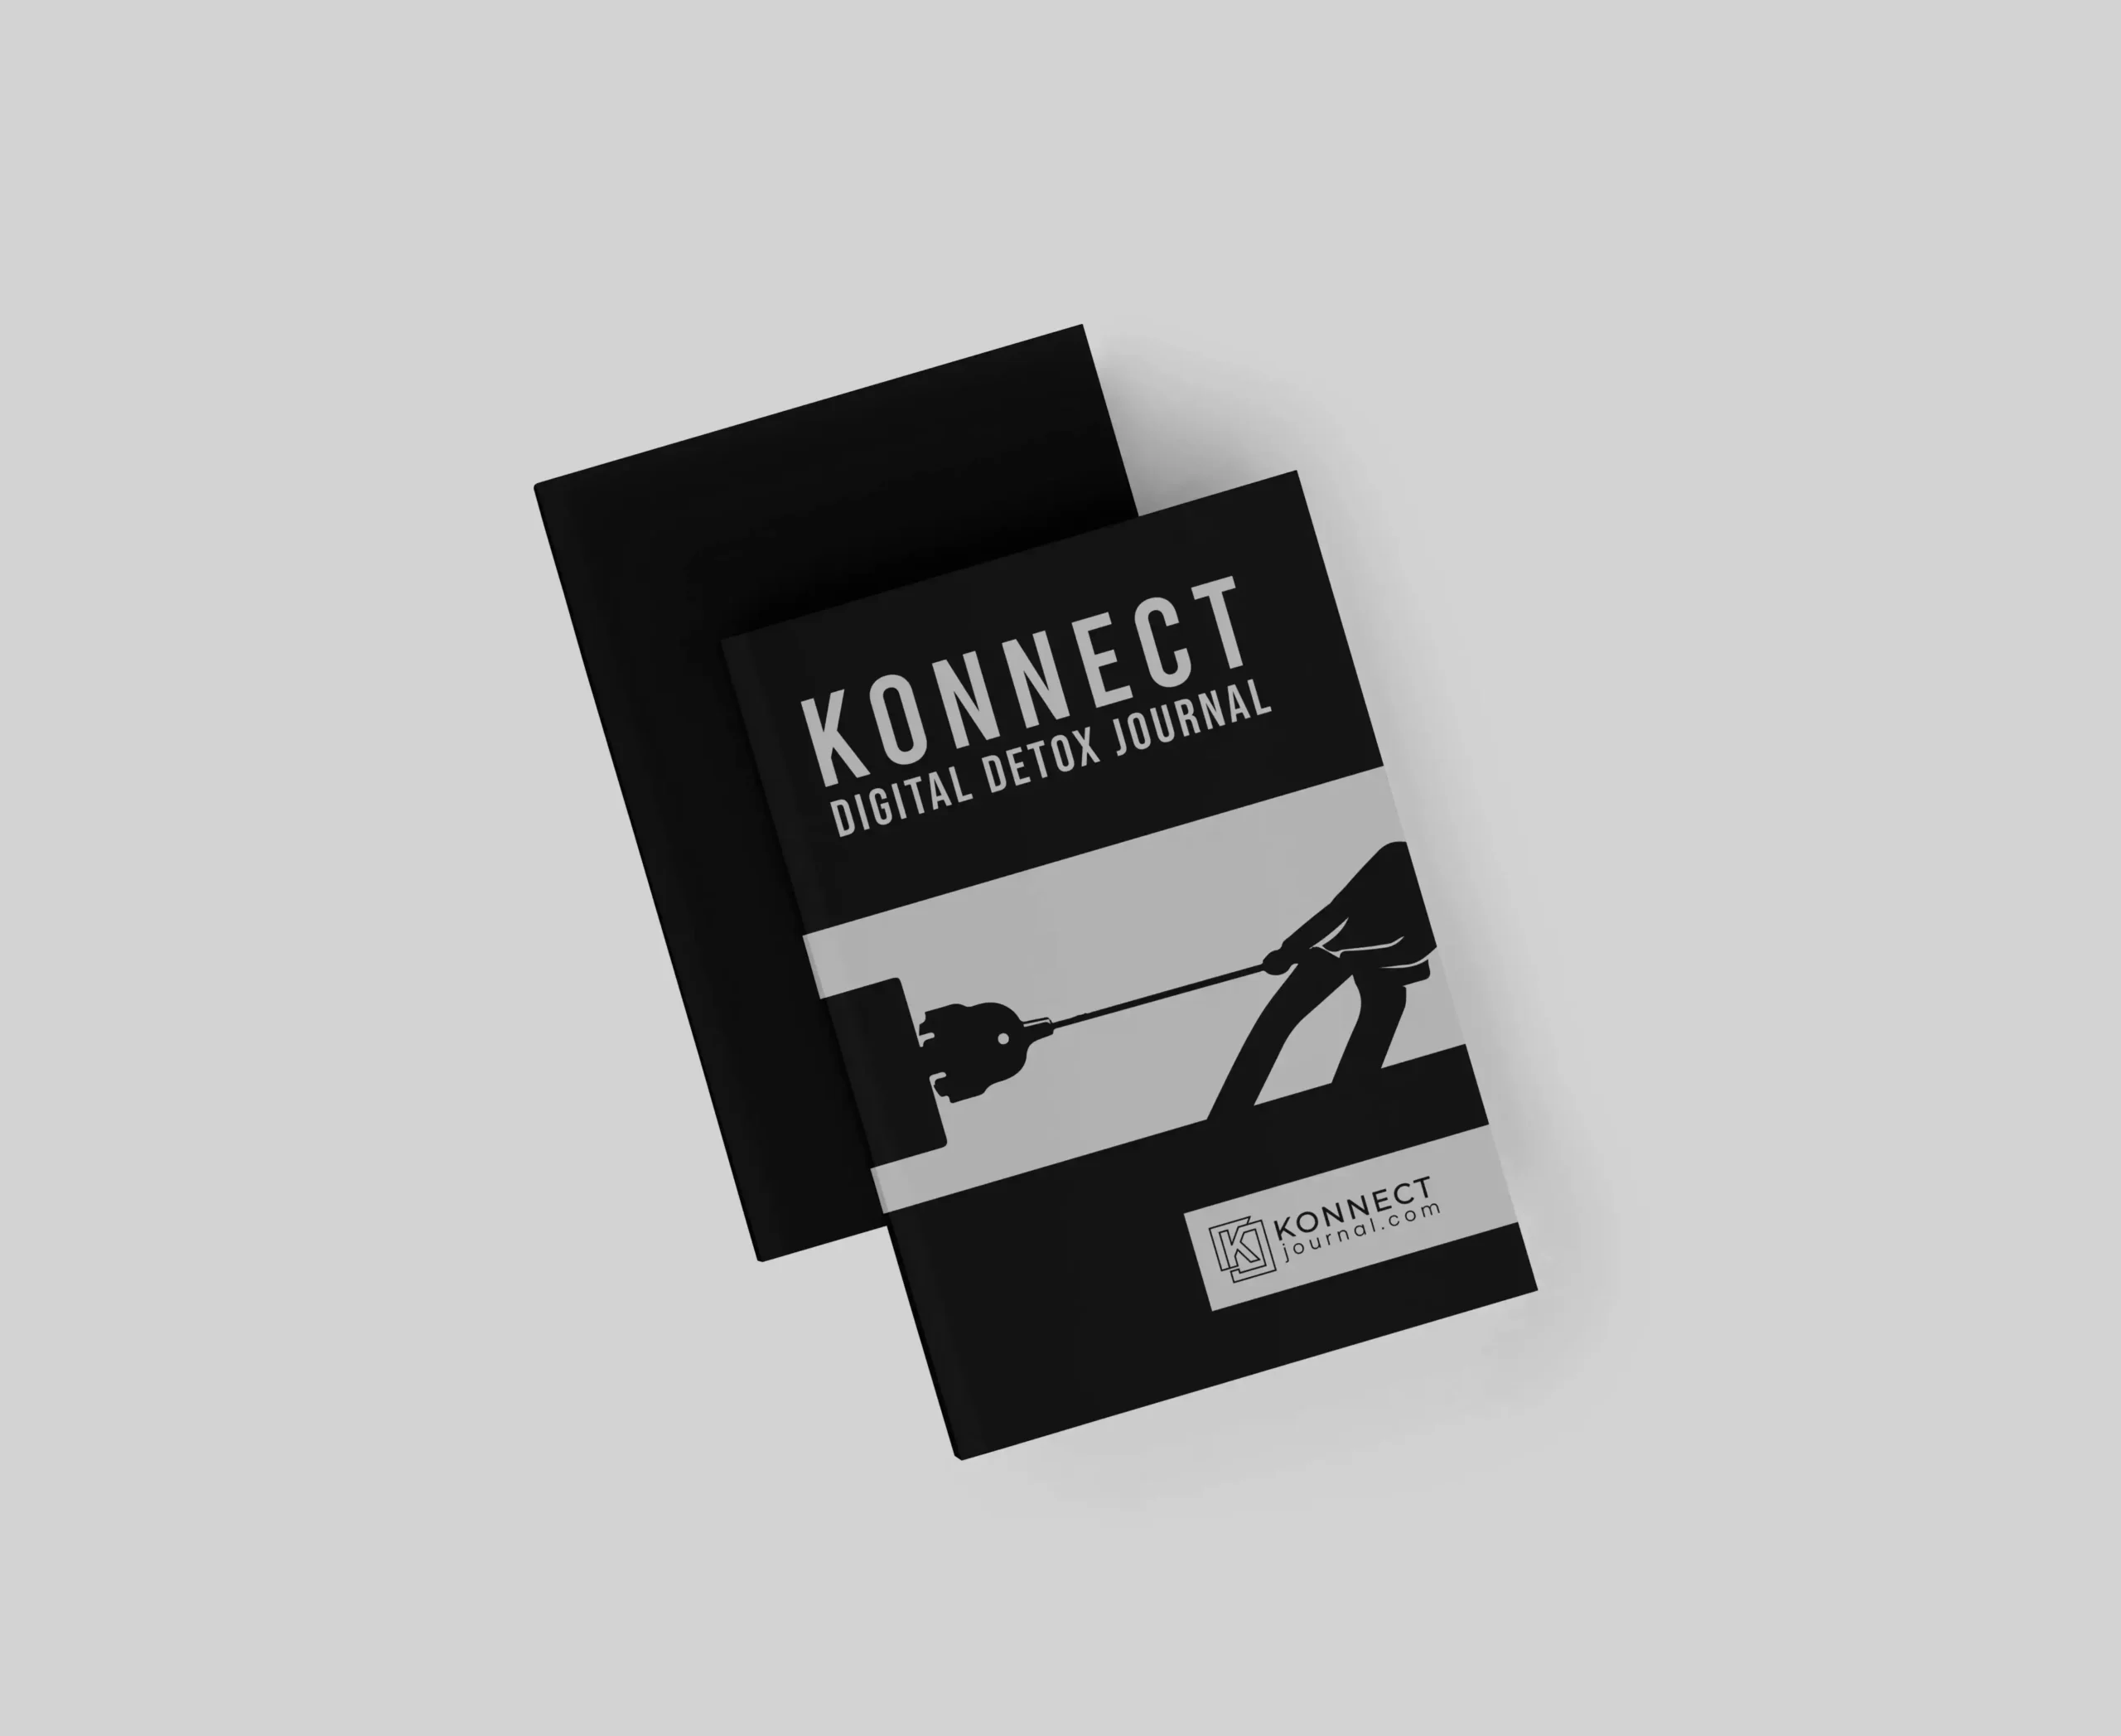 Konnect Digital Detox Journal cover